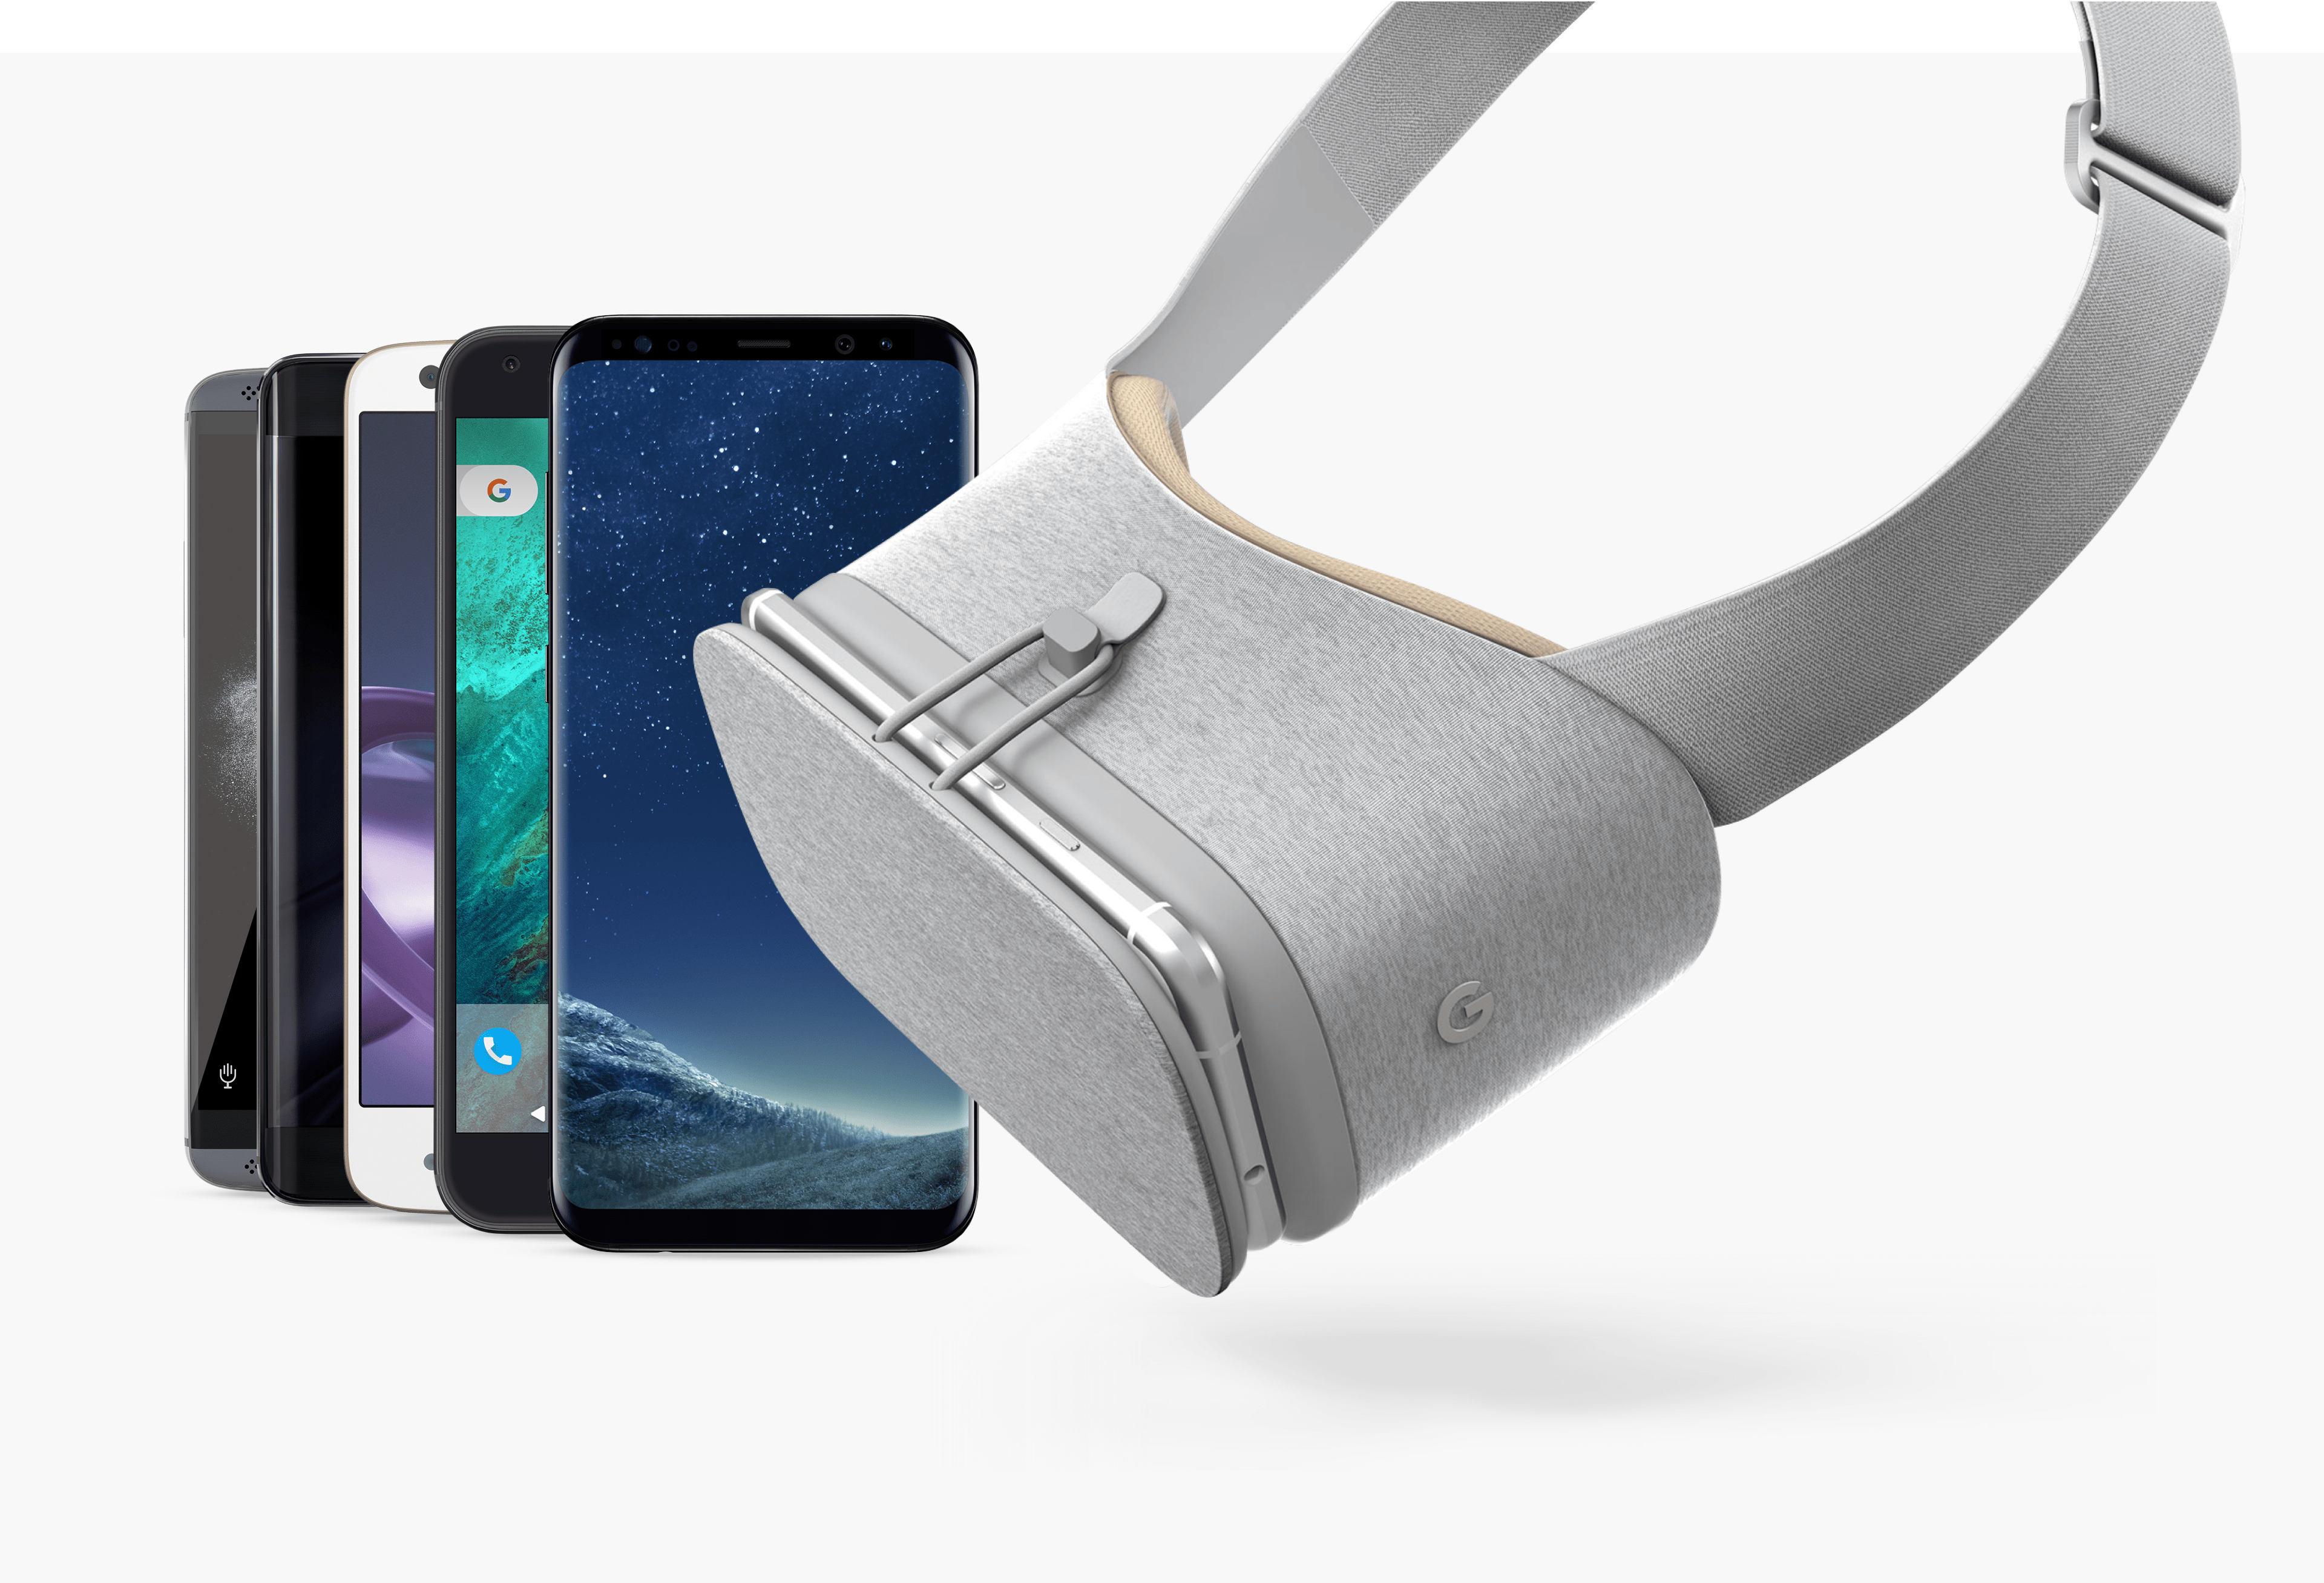 pastel Retfærdighed Rundt og rundt Samsung Galaxy S8 and S8+ Finally Receives Daydream VR Support | TelecomTalk